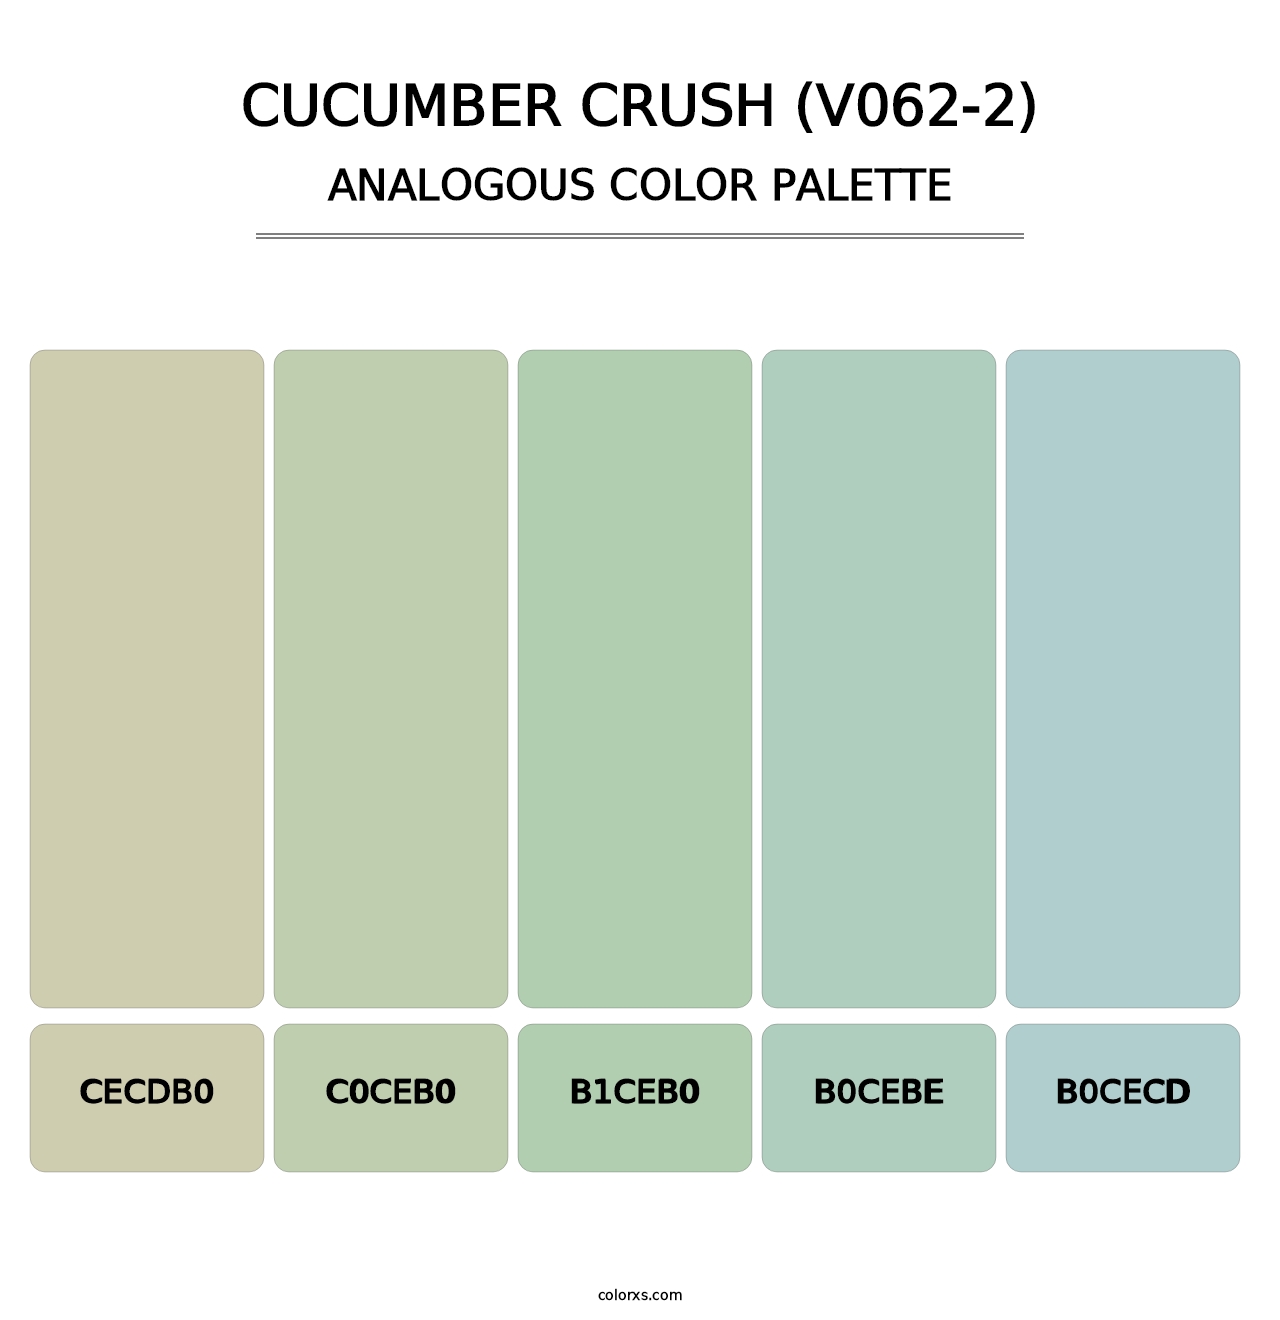 Cucumber Crush (V062-2) - Analogous Color Palette